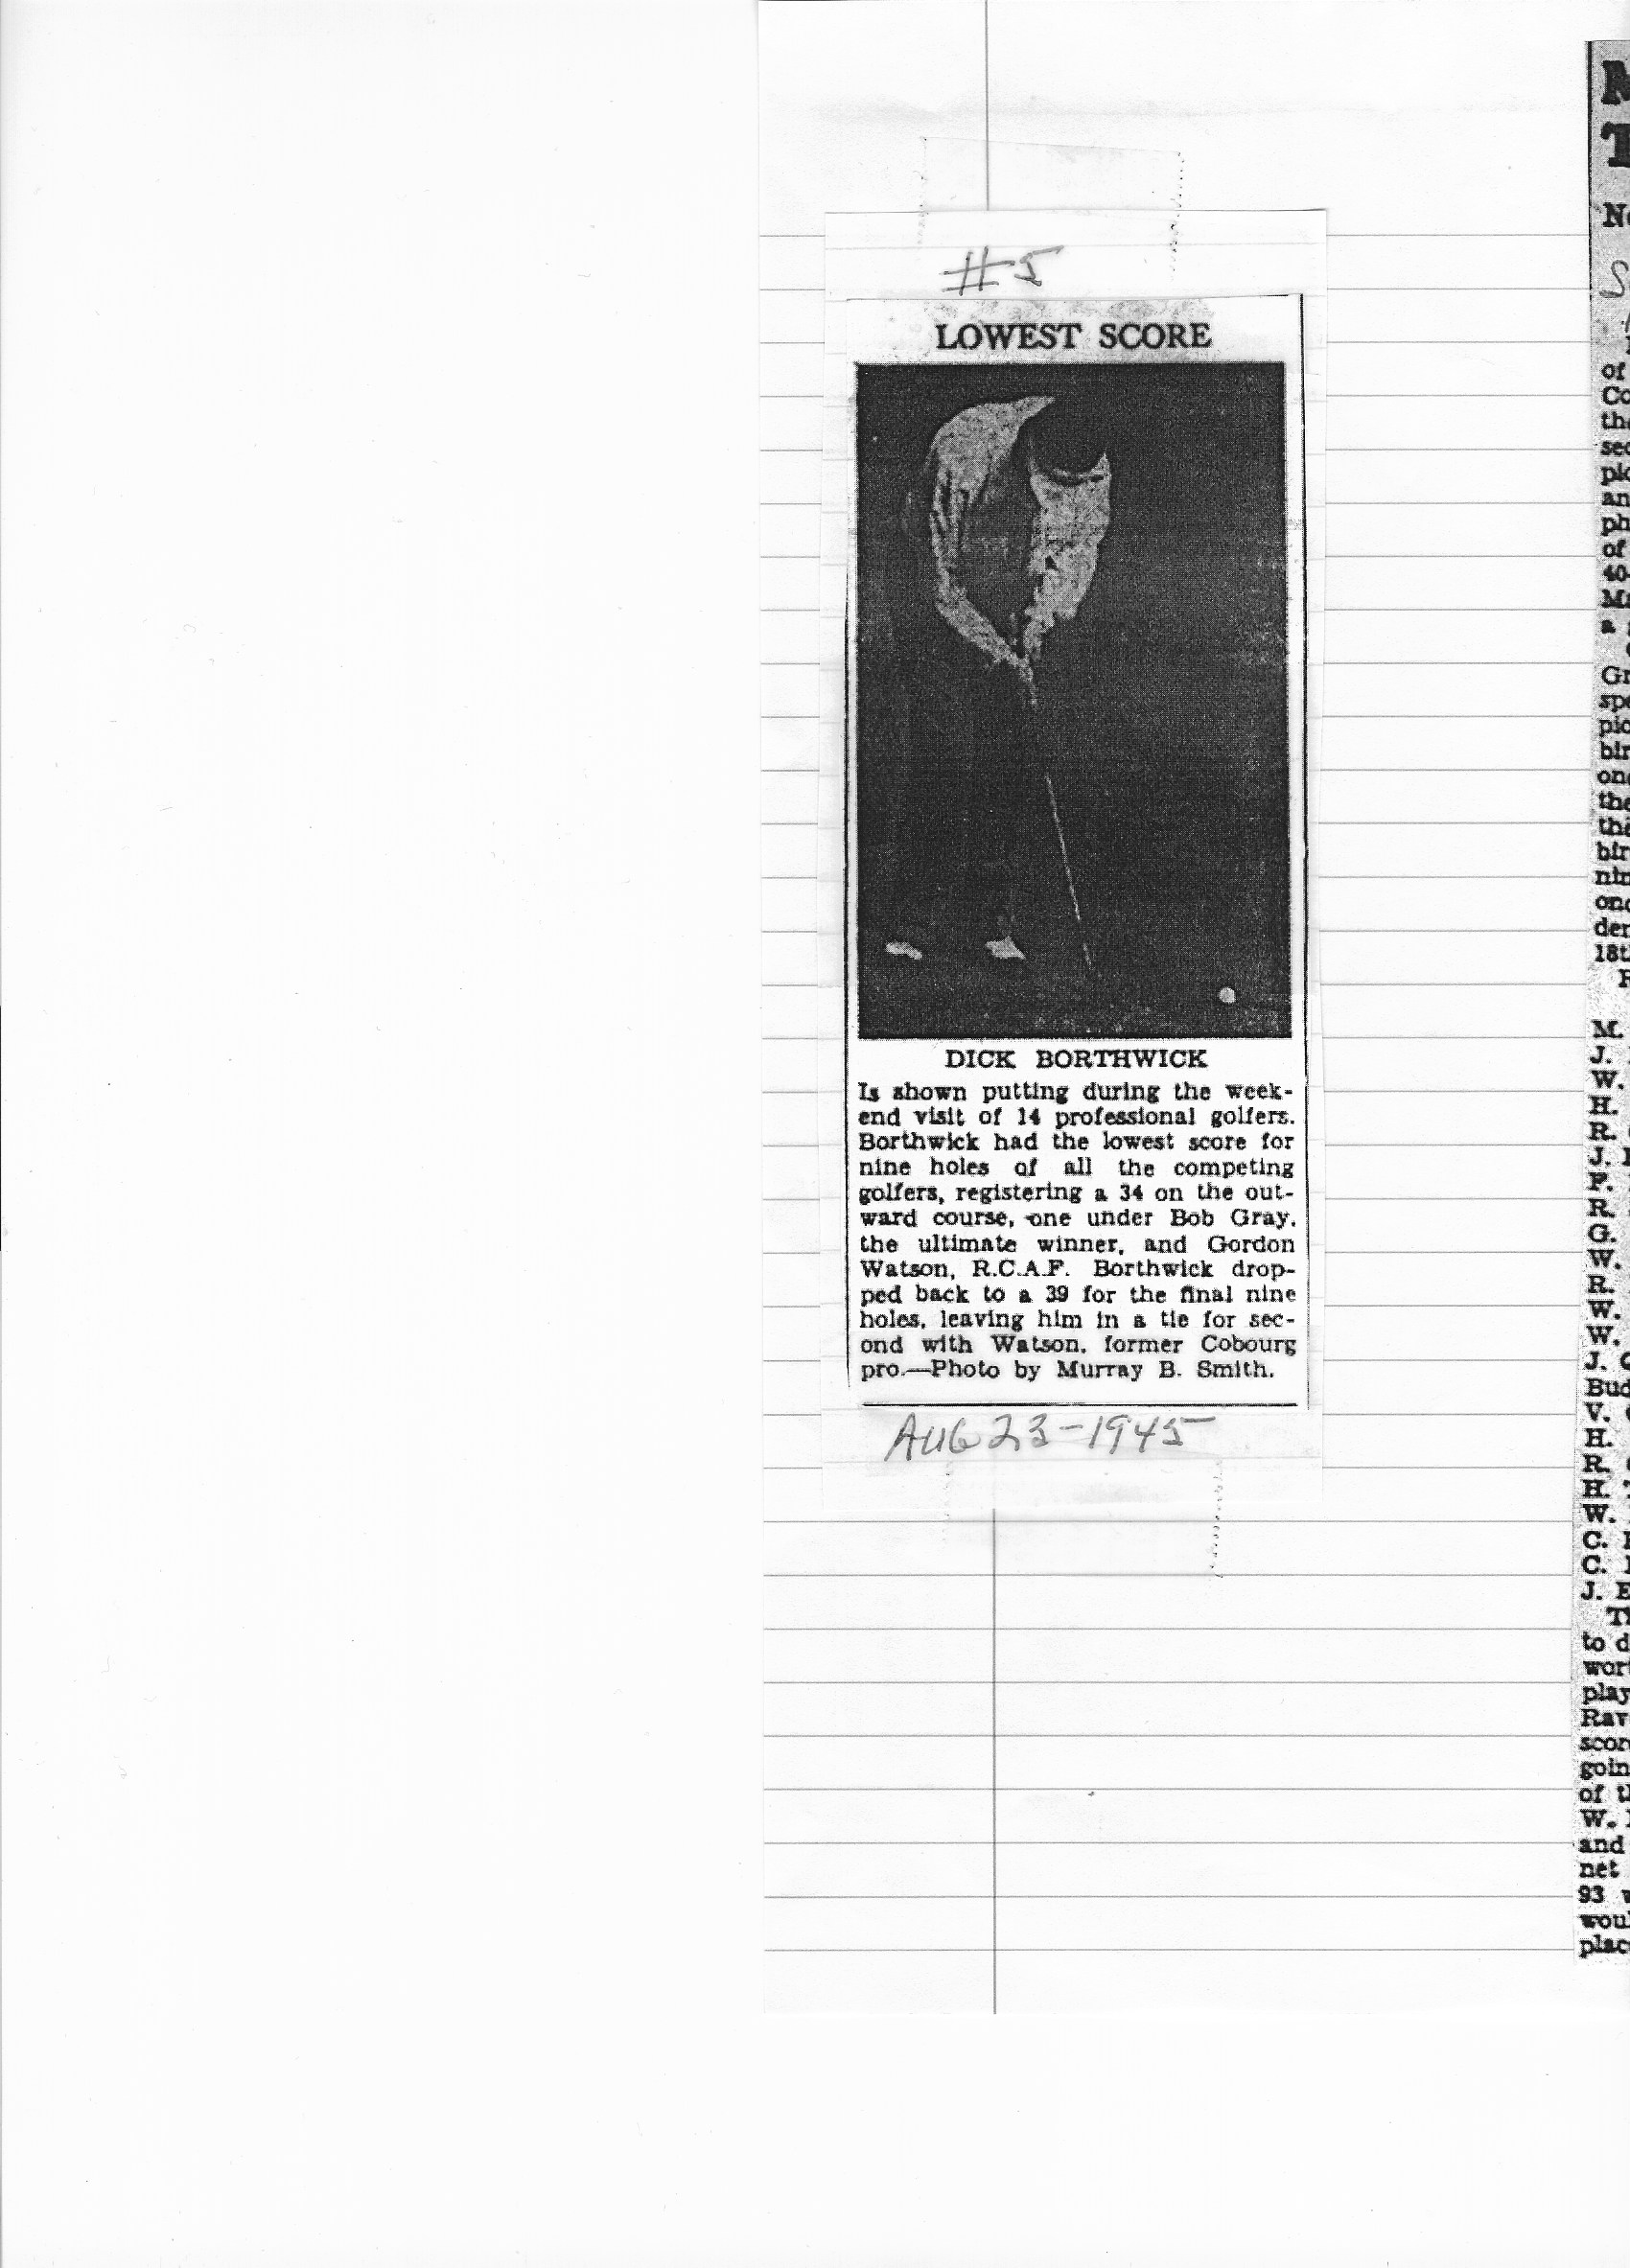 1945-08-23 Golf -Lowest Score Dick Borthwick